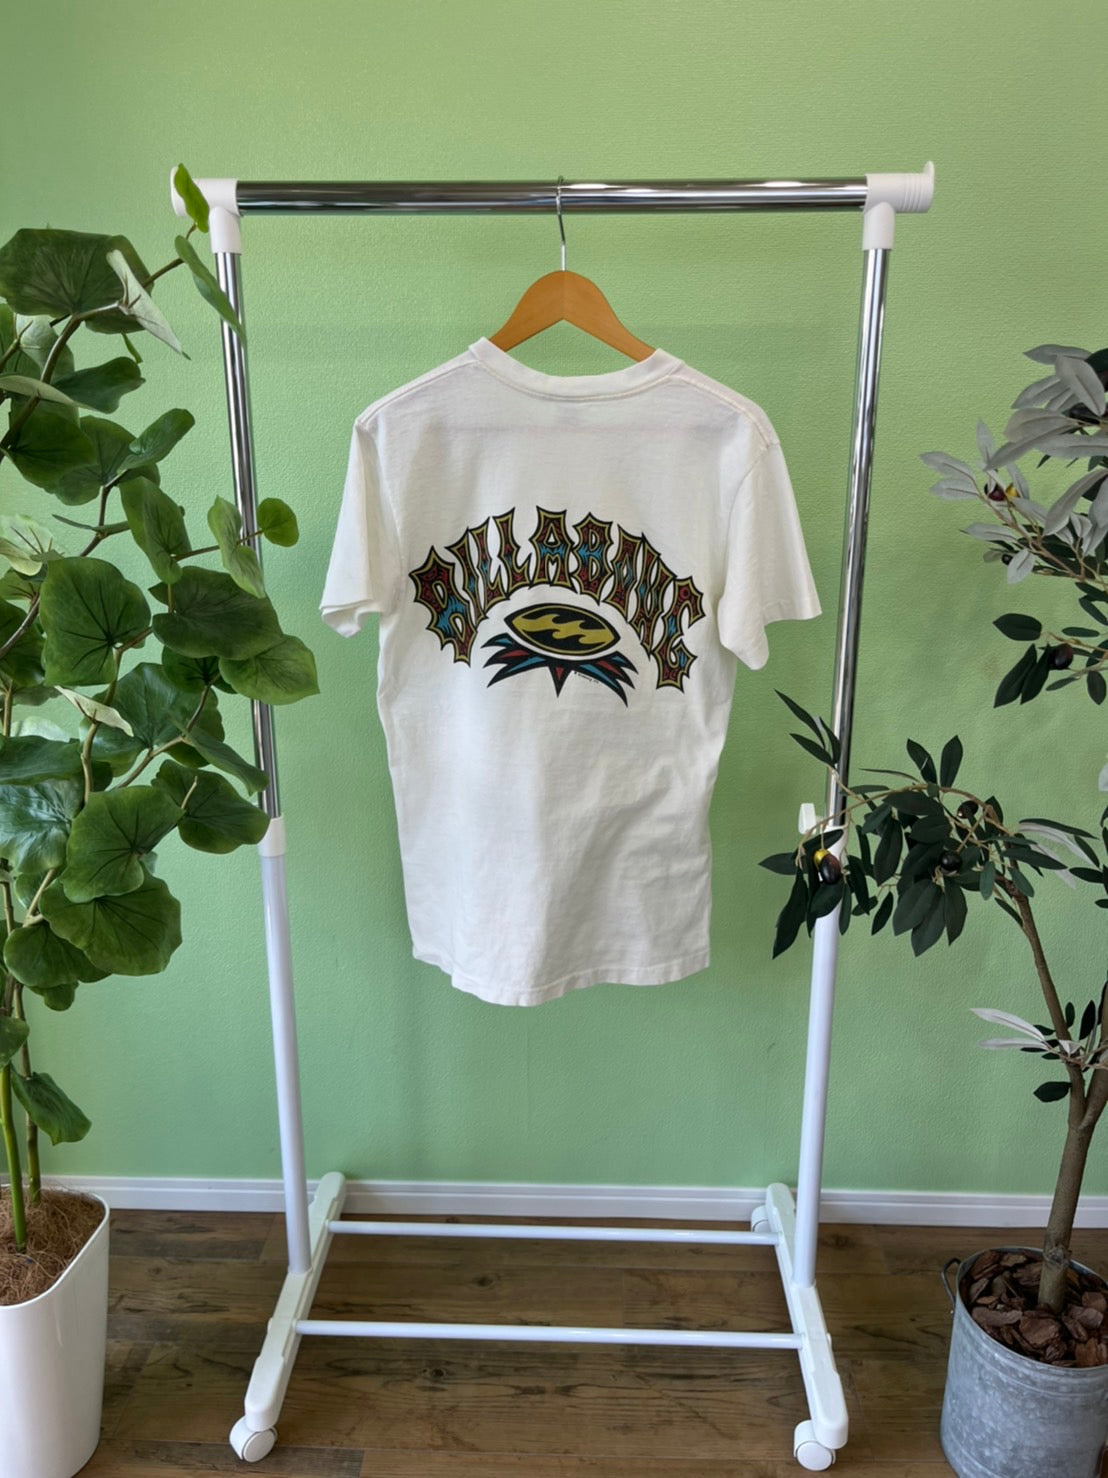 【Billabong】90's vintage billabong rare logo t-shirt made in USA (men's L)